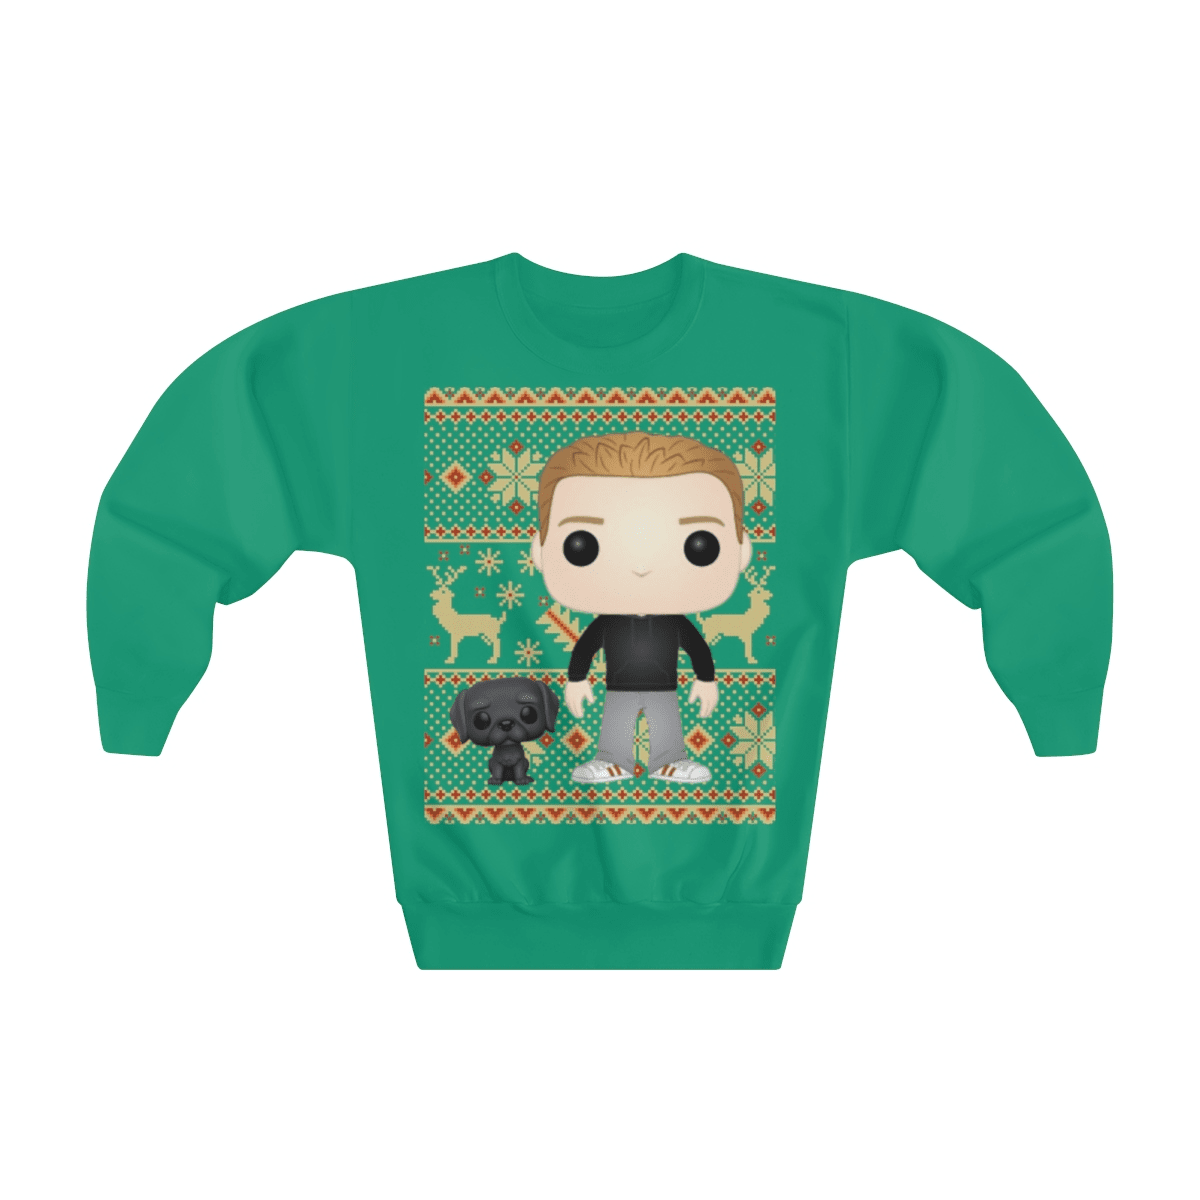 Custom Funko Pop Christmas Ugly Sweater